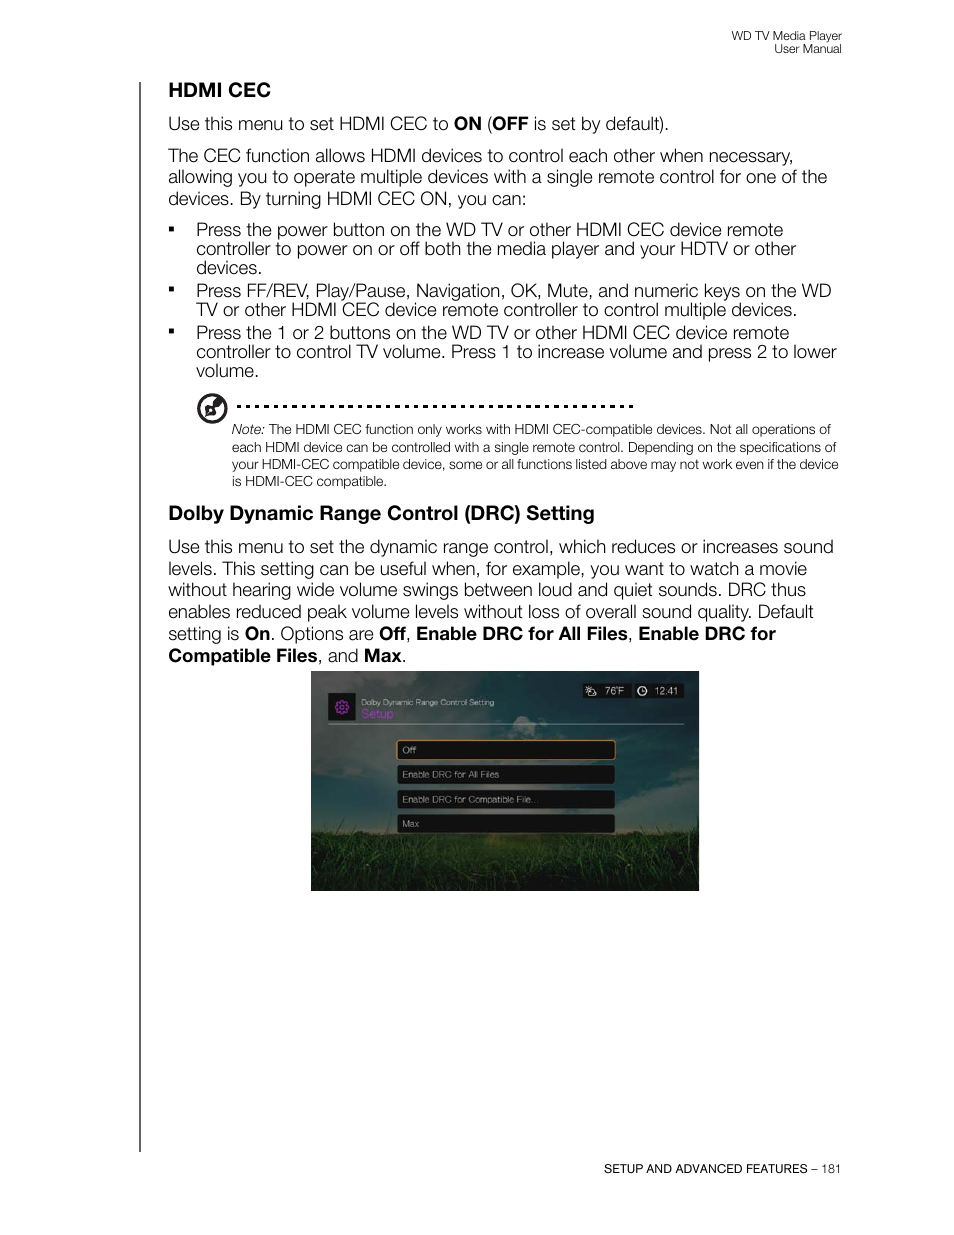 Hdmi cec, Dolby dynamic range control (drc) setting | Western Digital WD TV  User Manual User Manual | Page 186 / 244 | Original mode